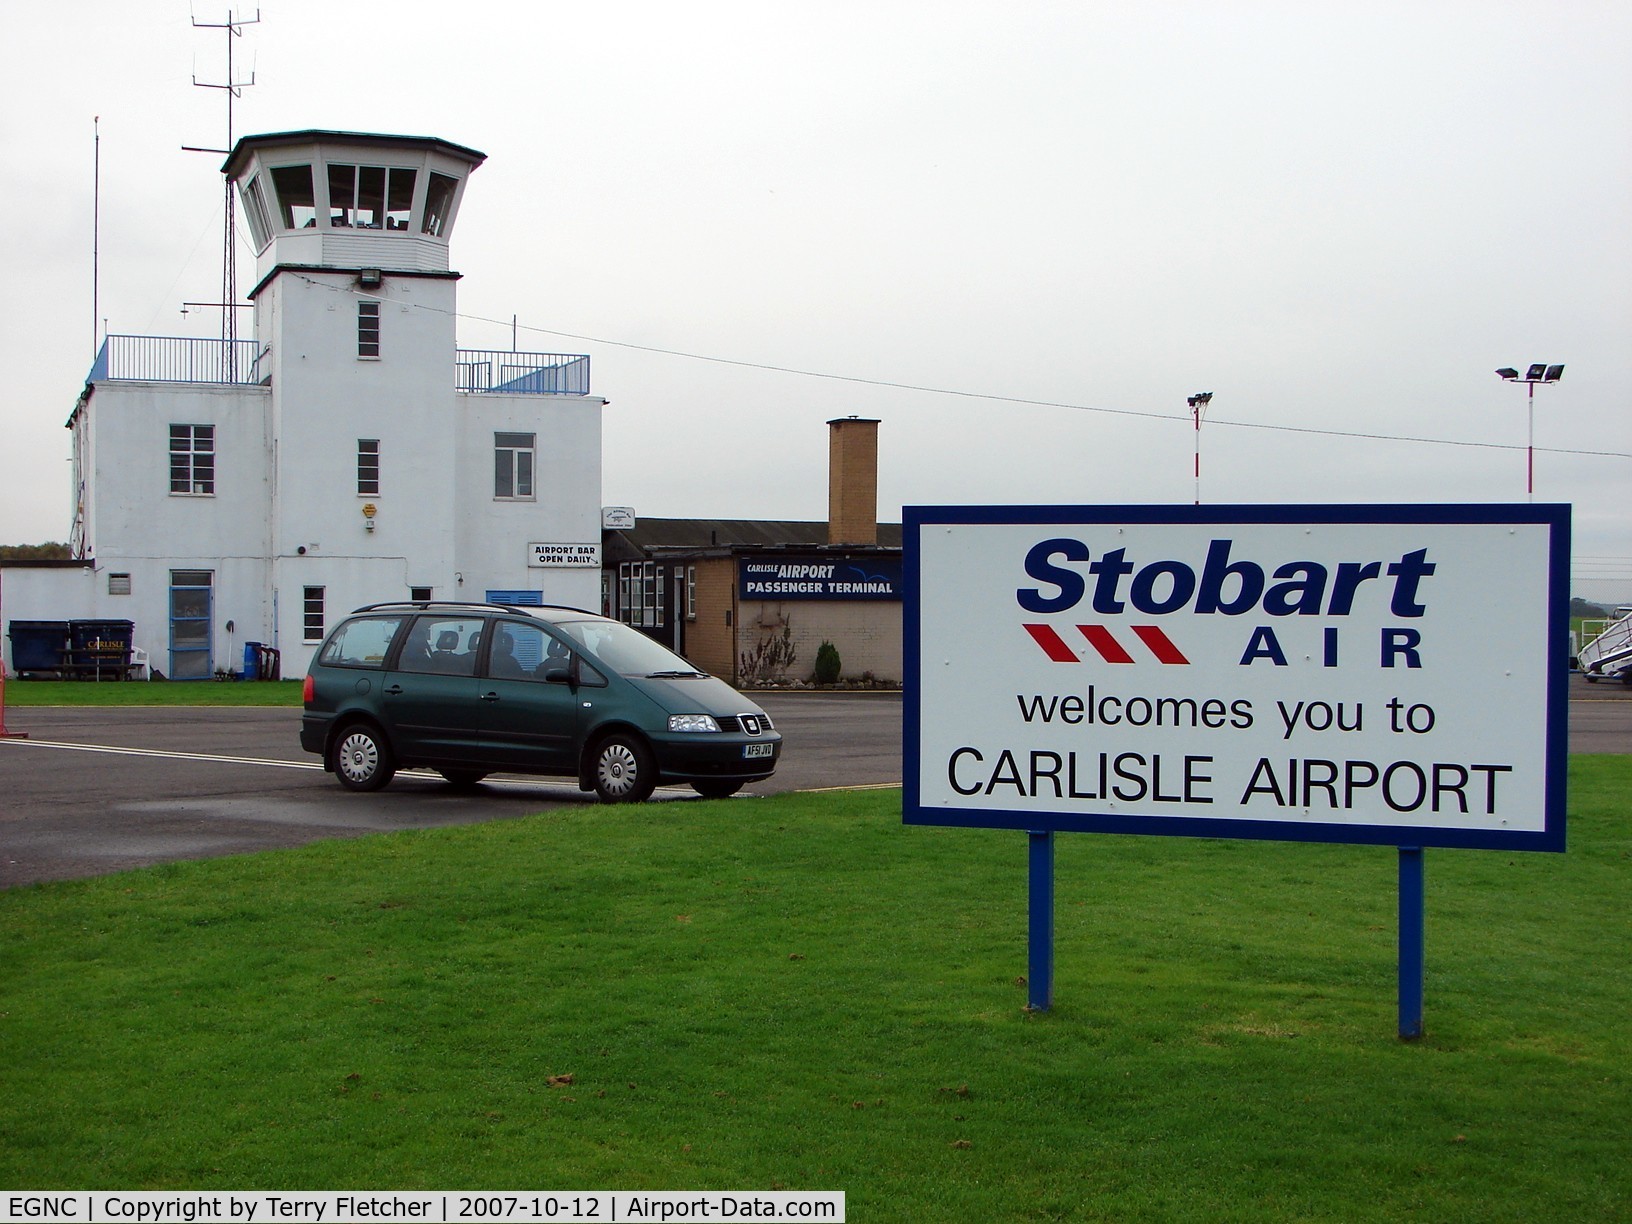 Carlisle Airport, Carlisle, England United Kingdom (EGNC) - Airport under new ownership